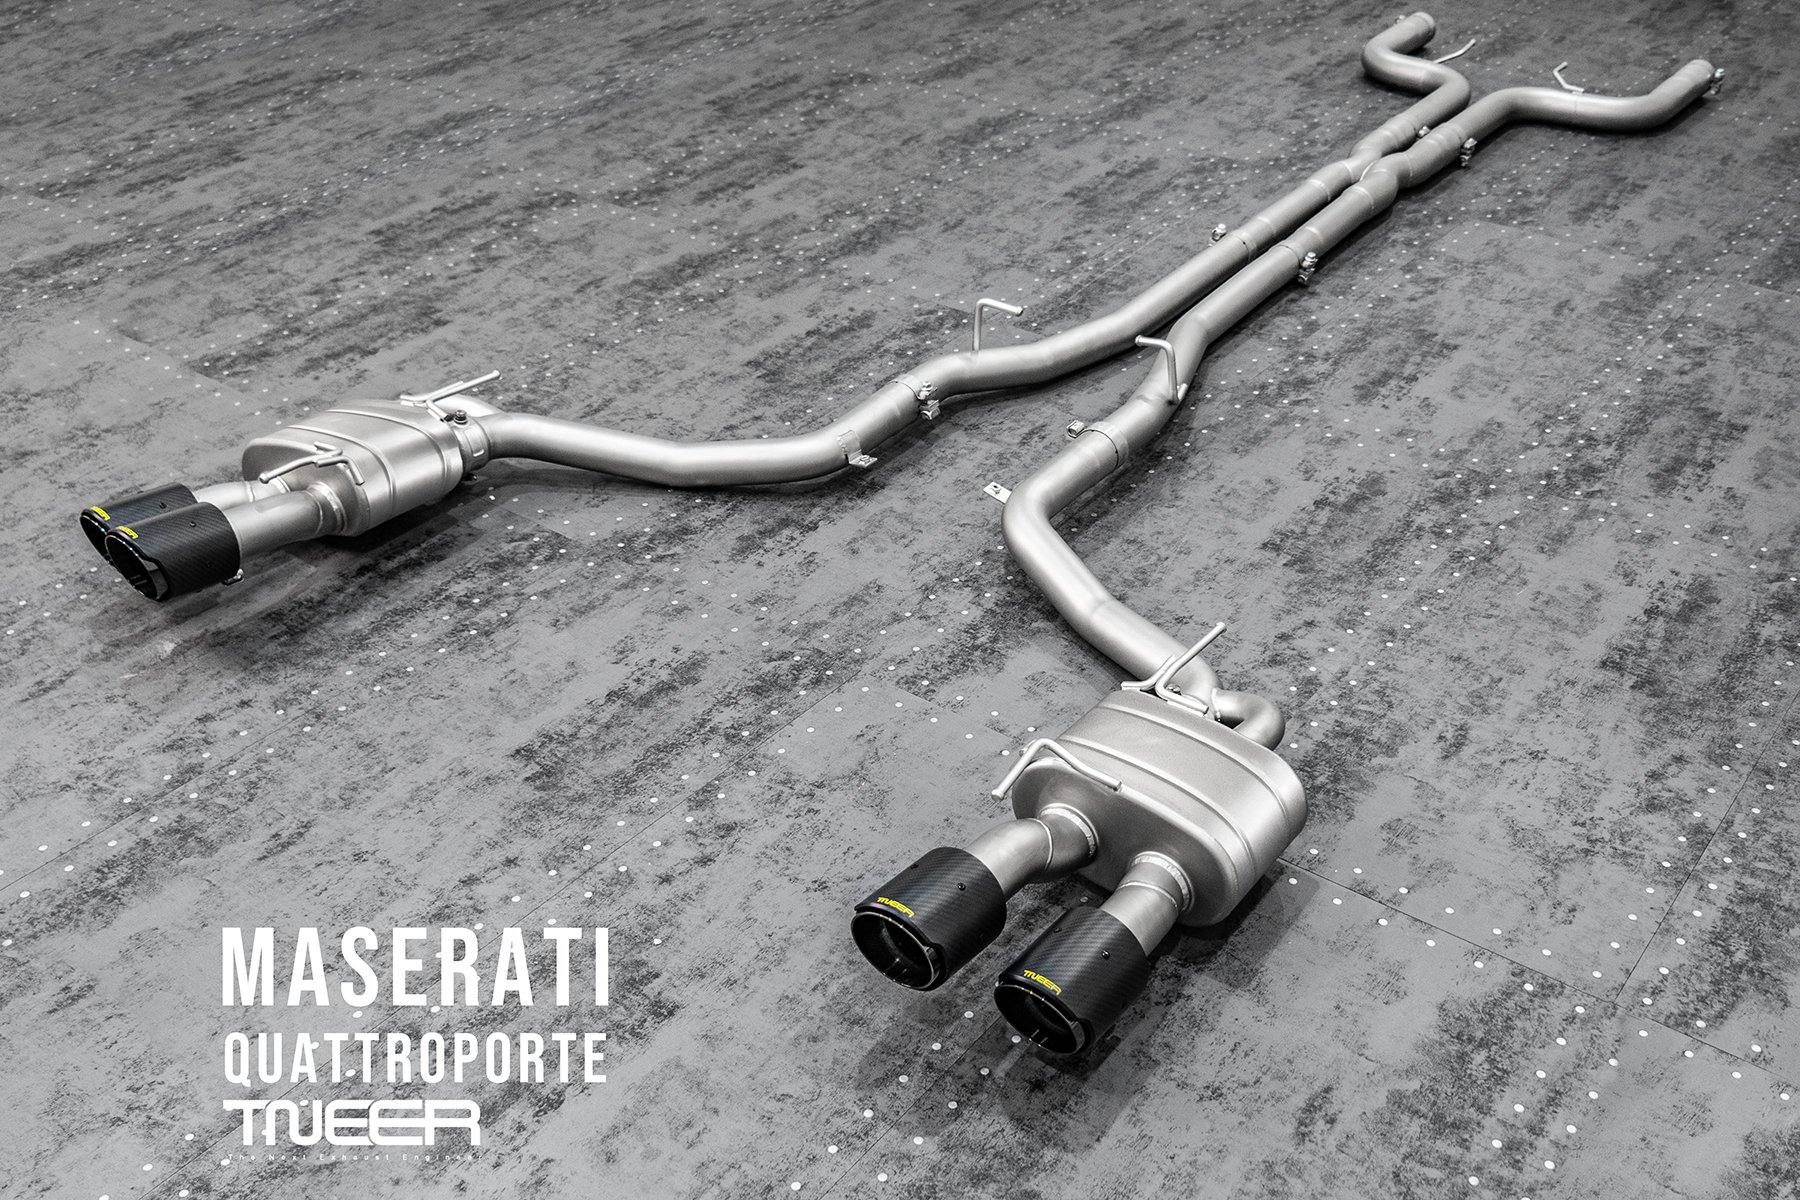 Maserati Quattroporte GTS TNEER Valvetronic Performance Exhaust System